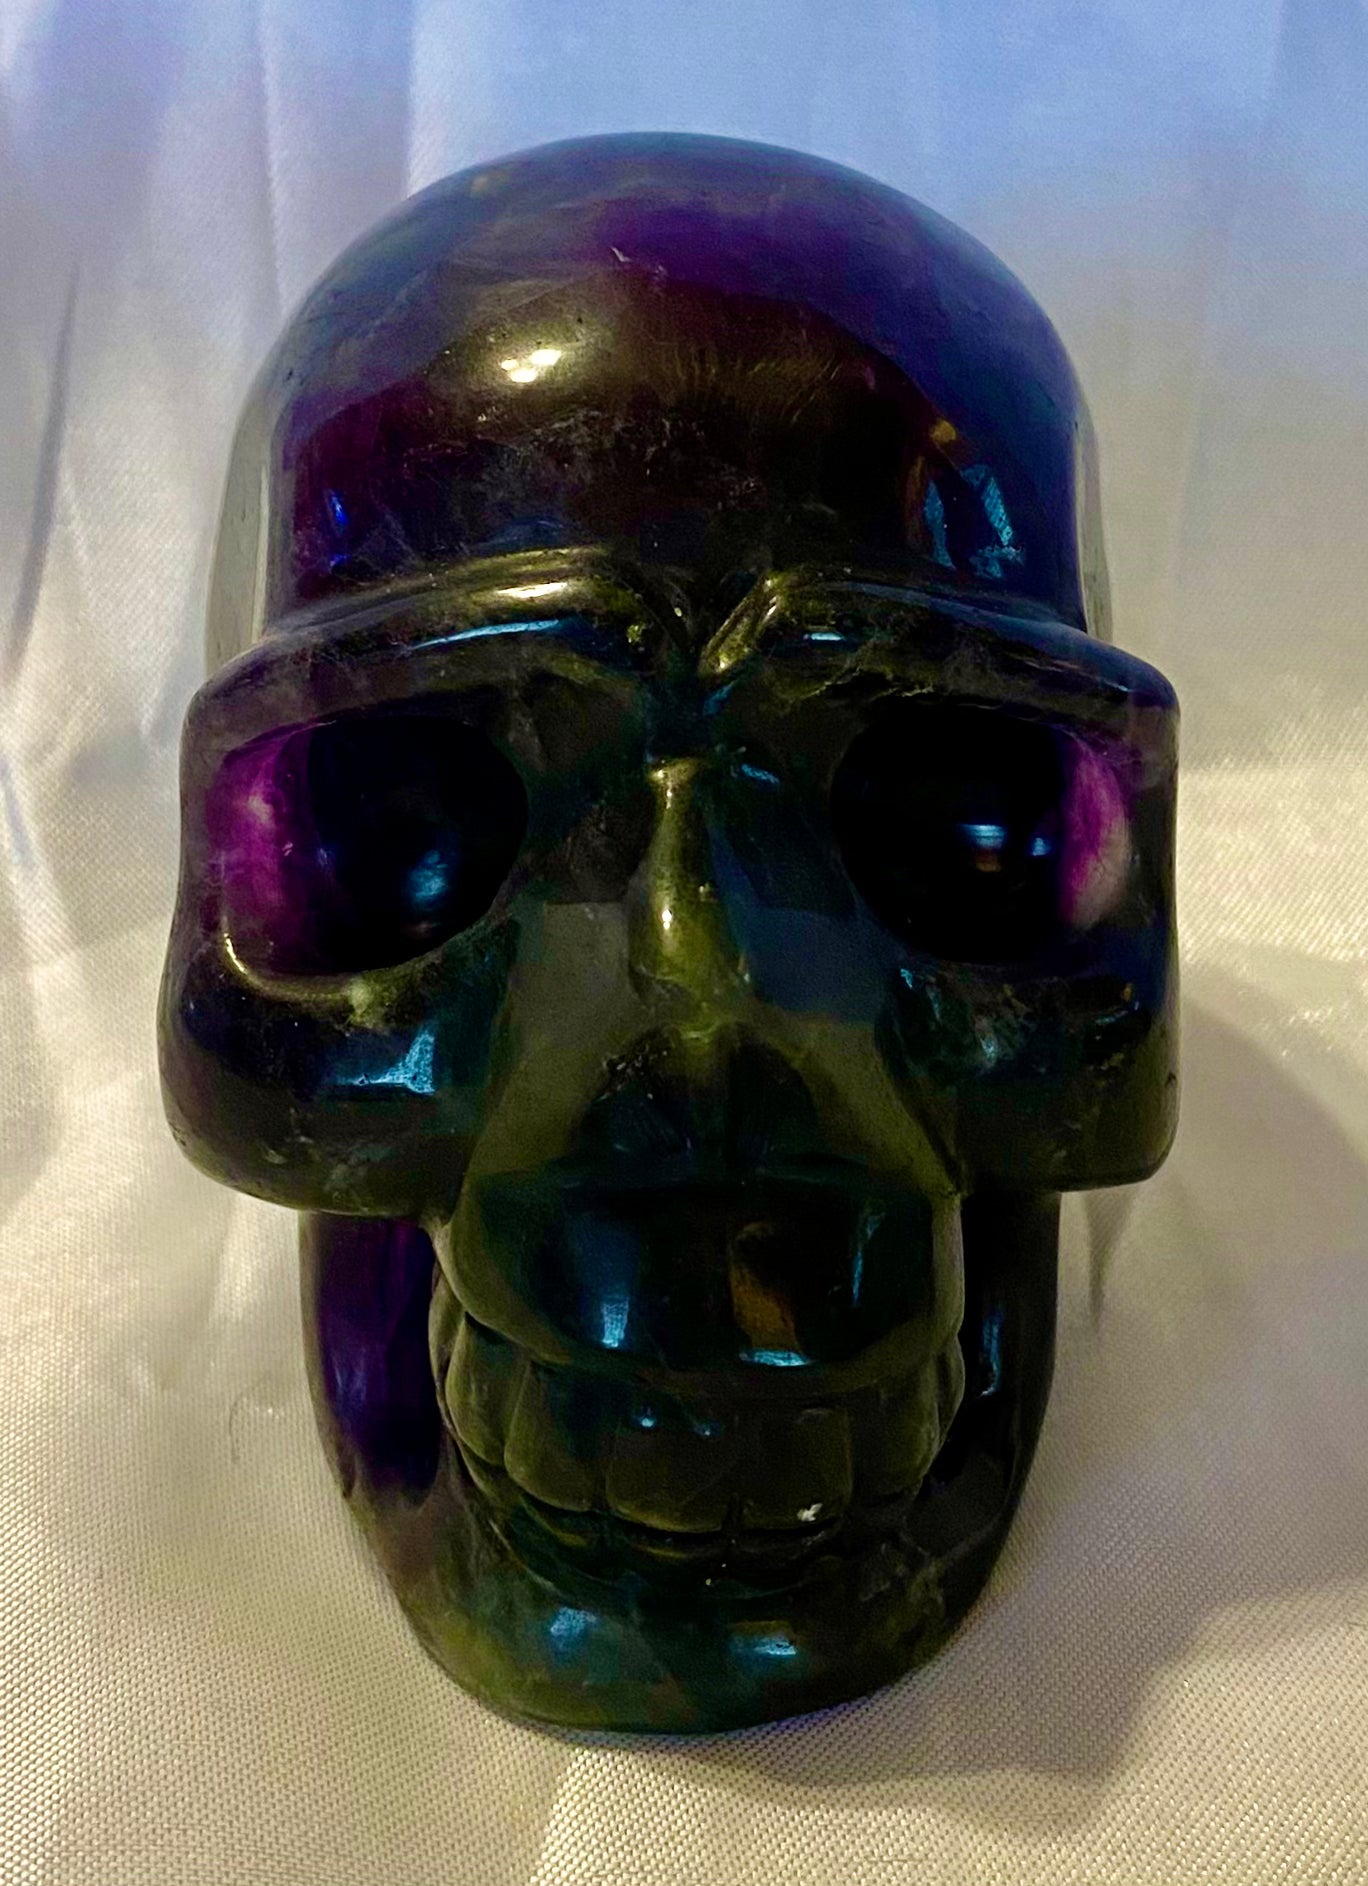 Large Fluorite Skull Sculpture 2 - Halloween decor, spooky polished purple green stone statue